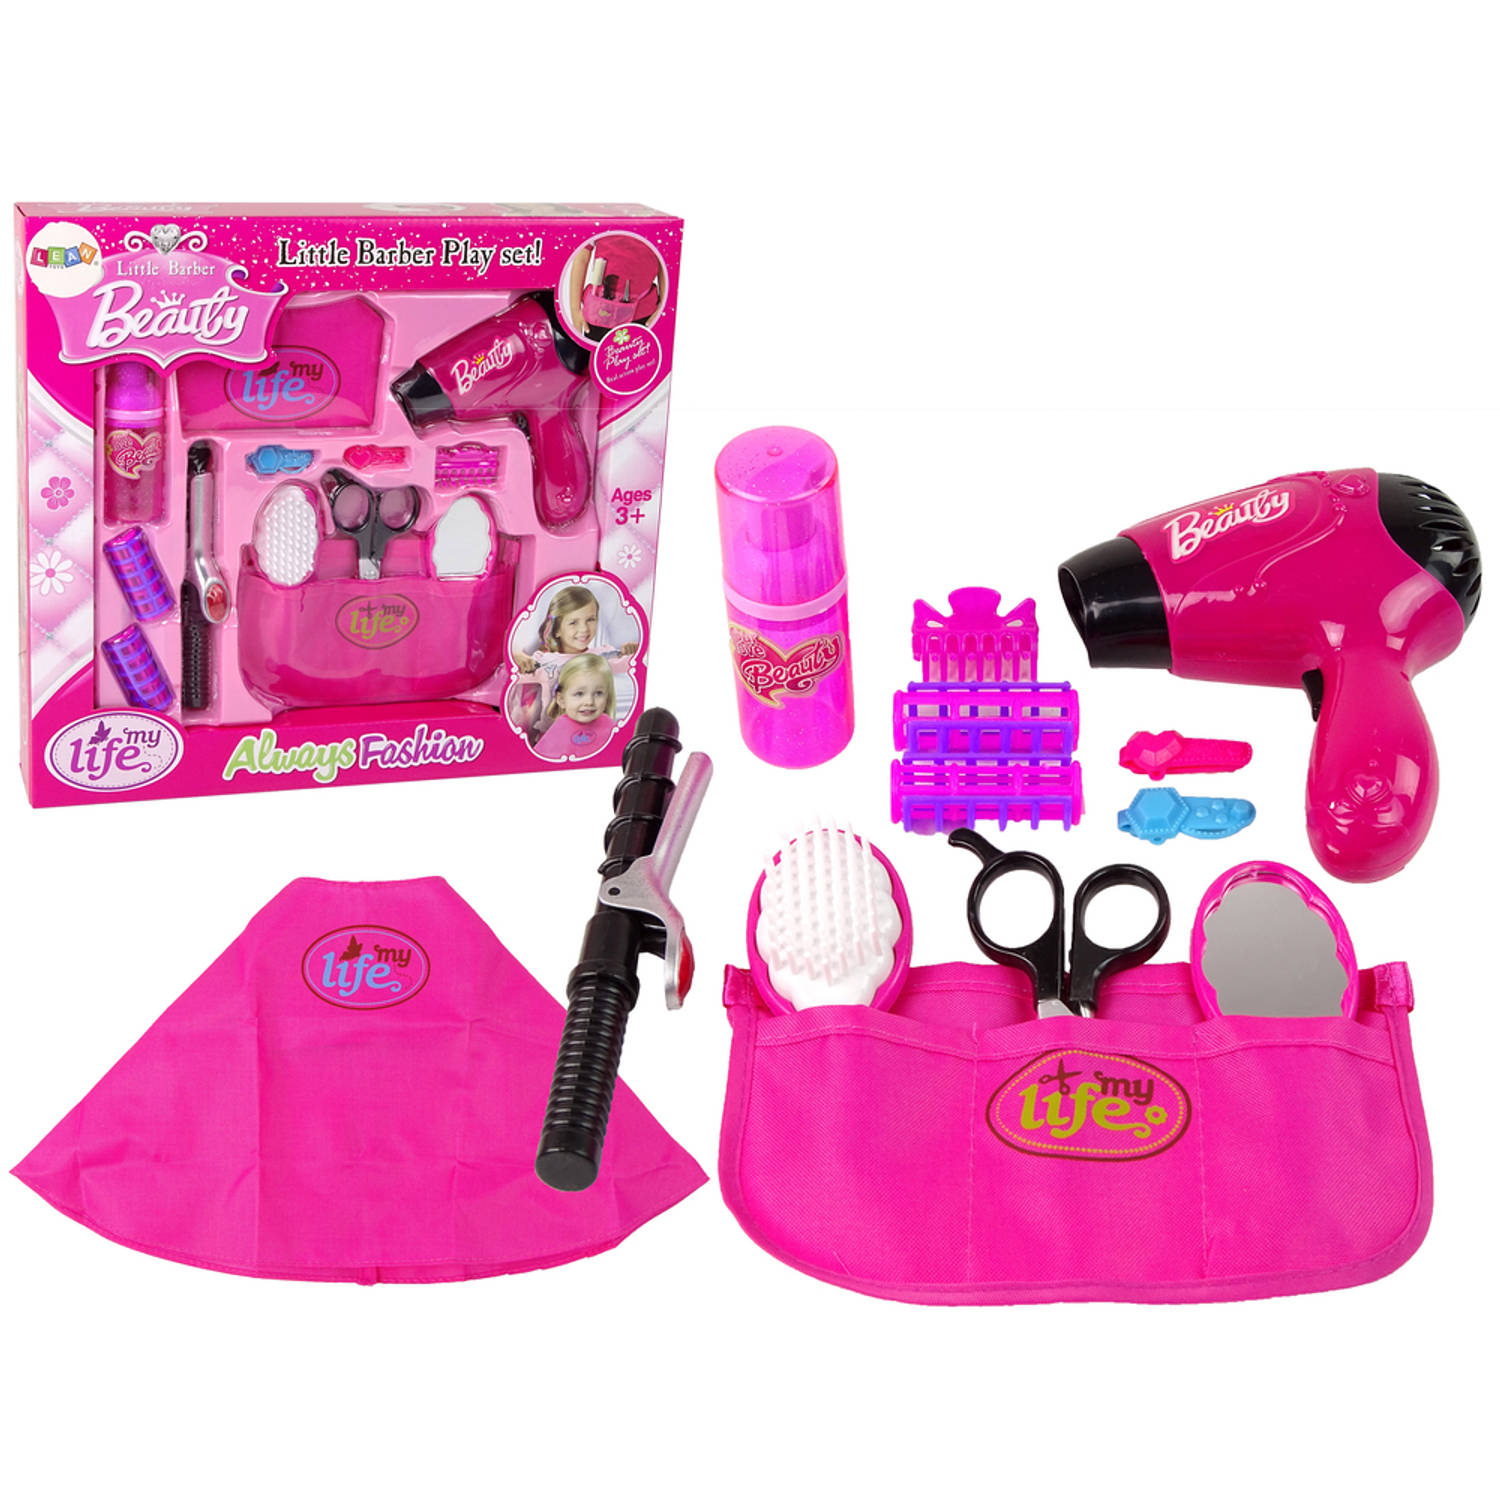 Little barber beauty 13-delige speelgoed kappersset met werkende föhn - Kappers speelset - Met heuptasje en accessoires